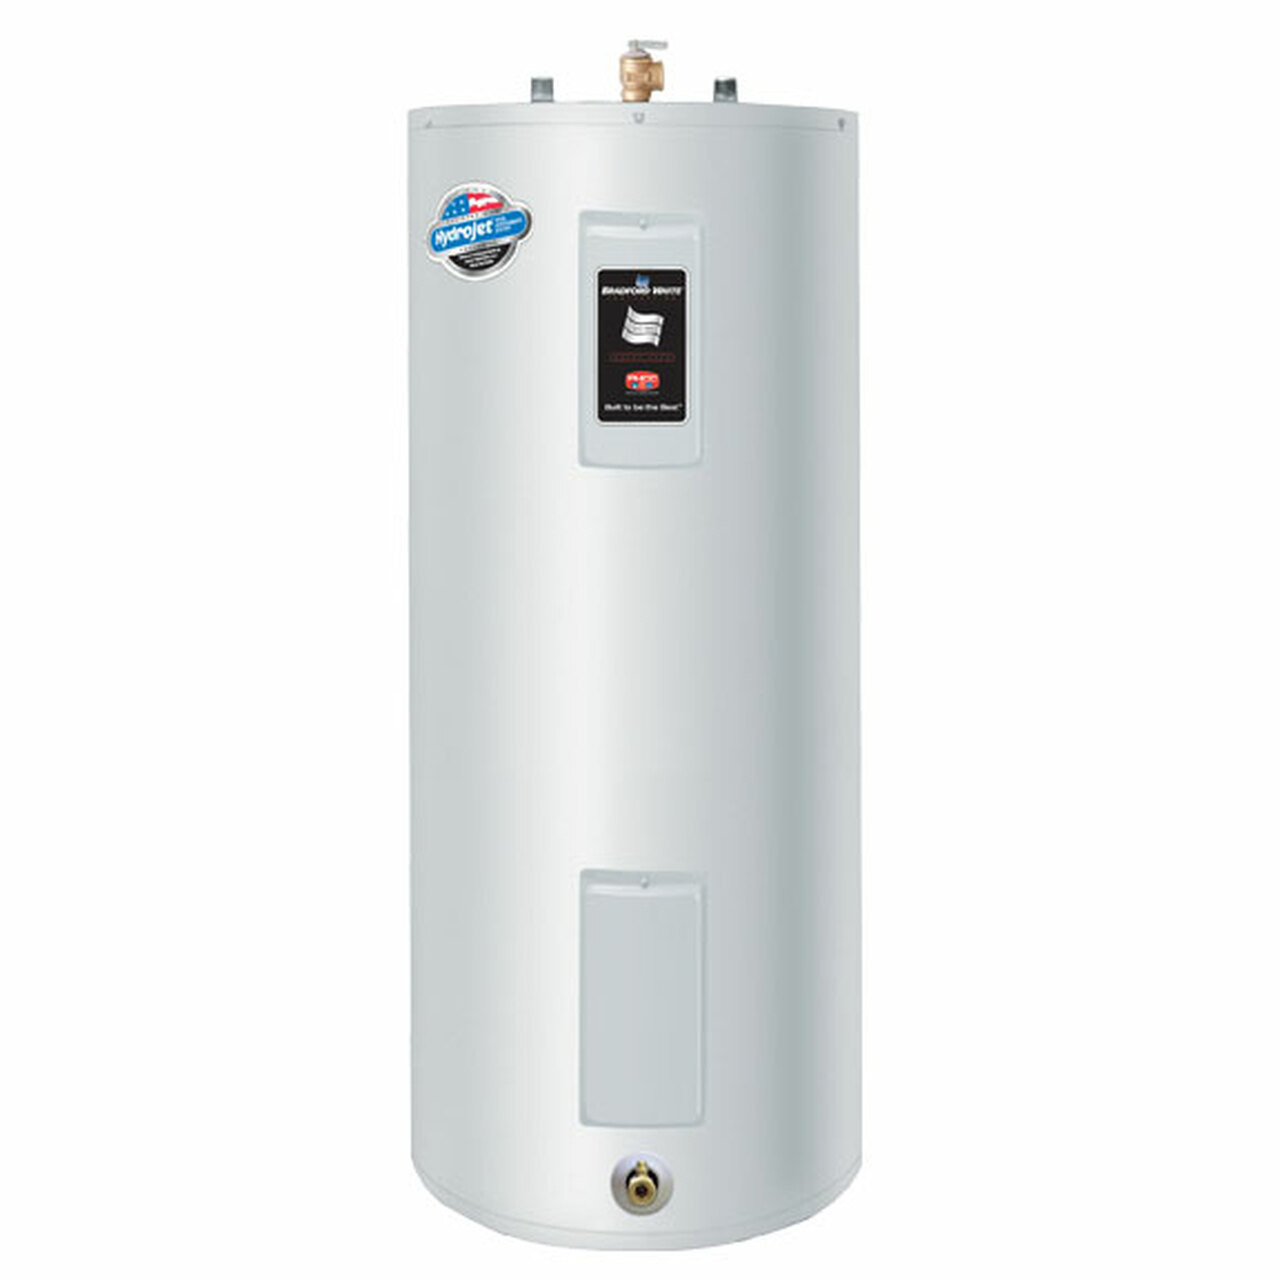 bradford-white-re330s6-1ncww-30-gallon-electric-water-heater